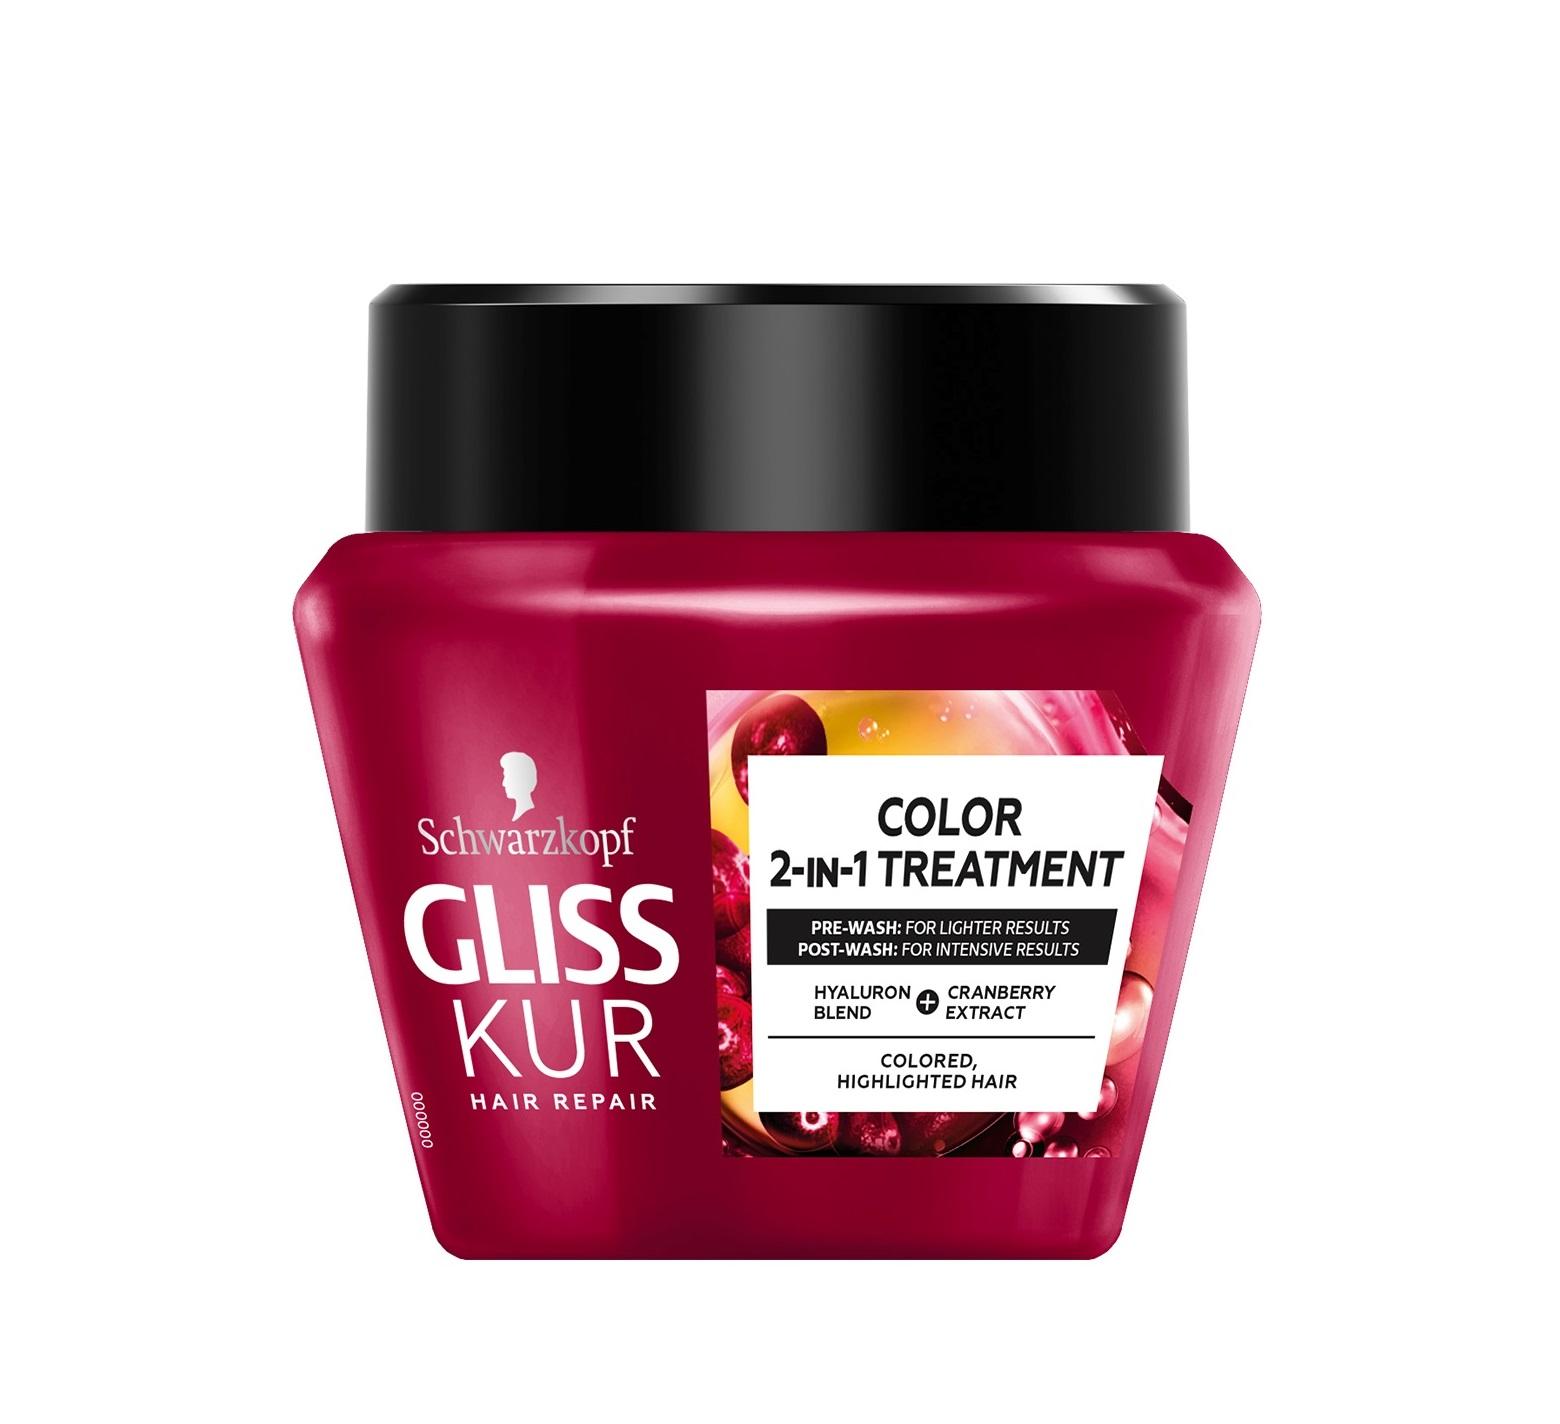 Gliss Ultimate Color 2-in-1 Treatment